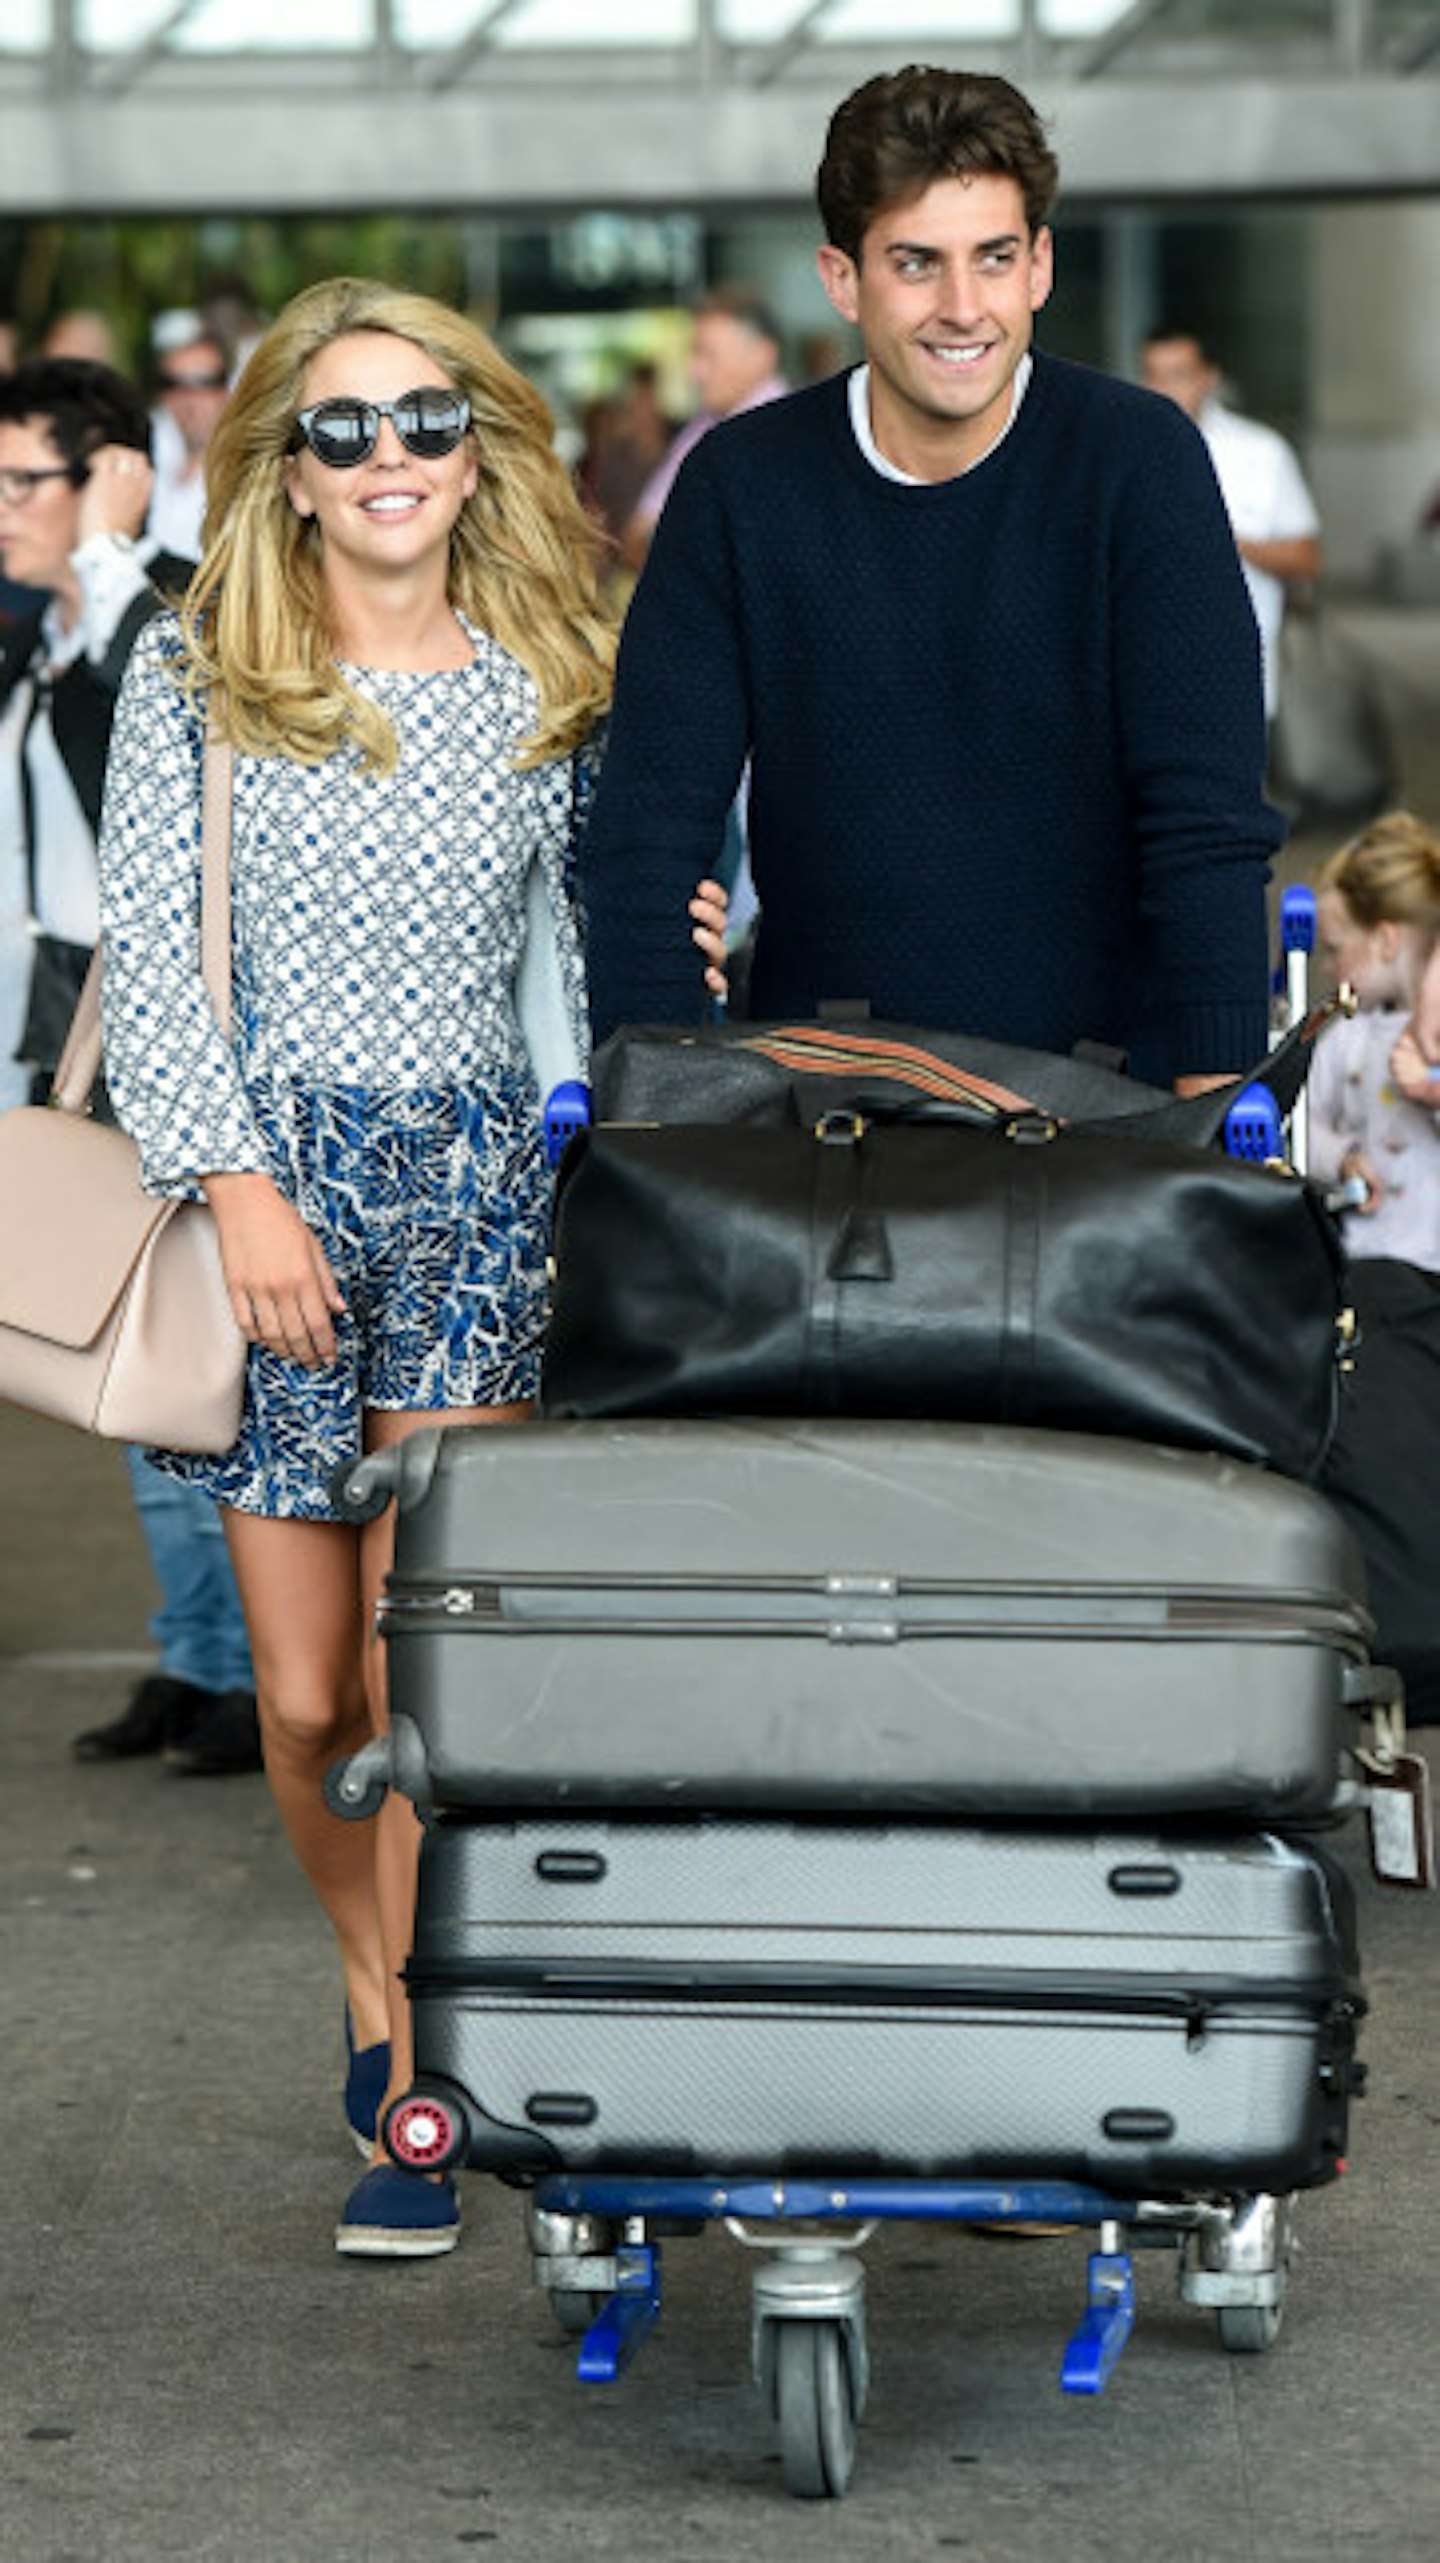 Lydia and Arg arriving in Marbella last week